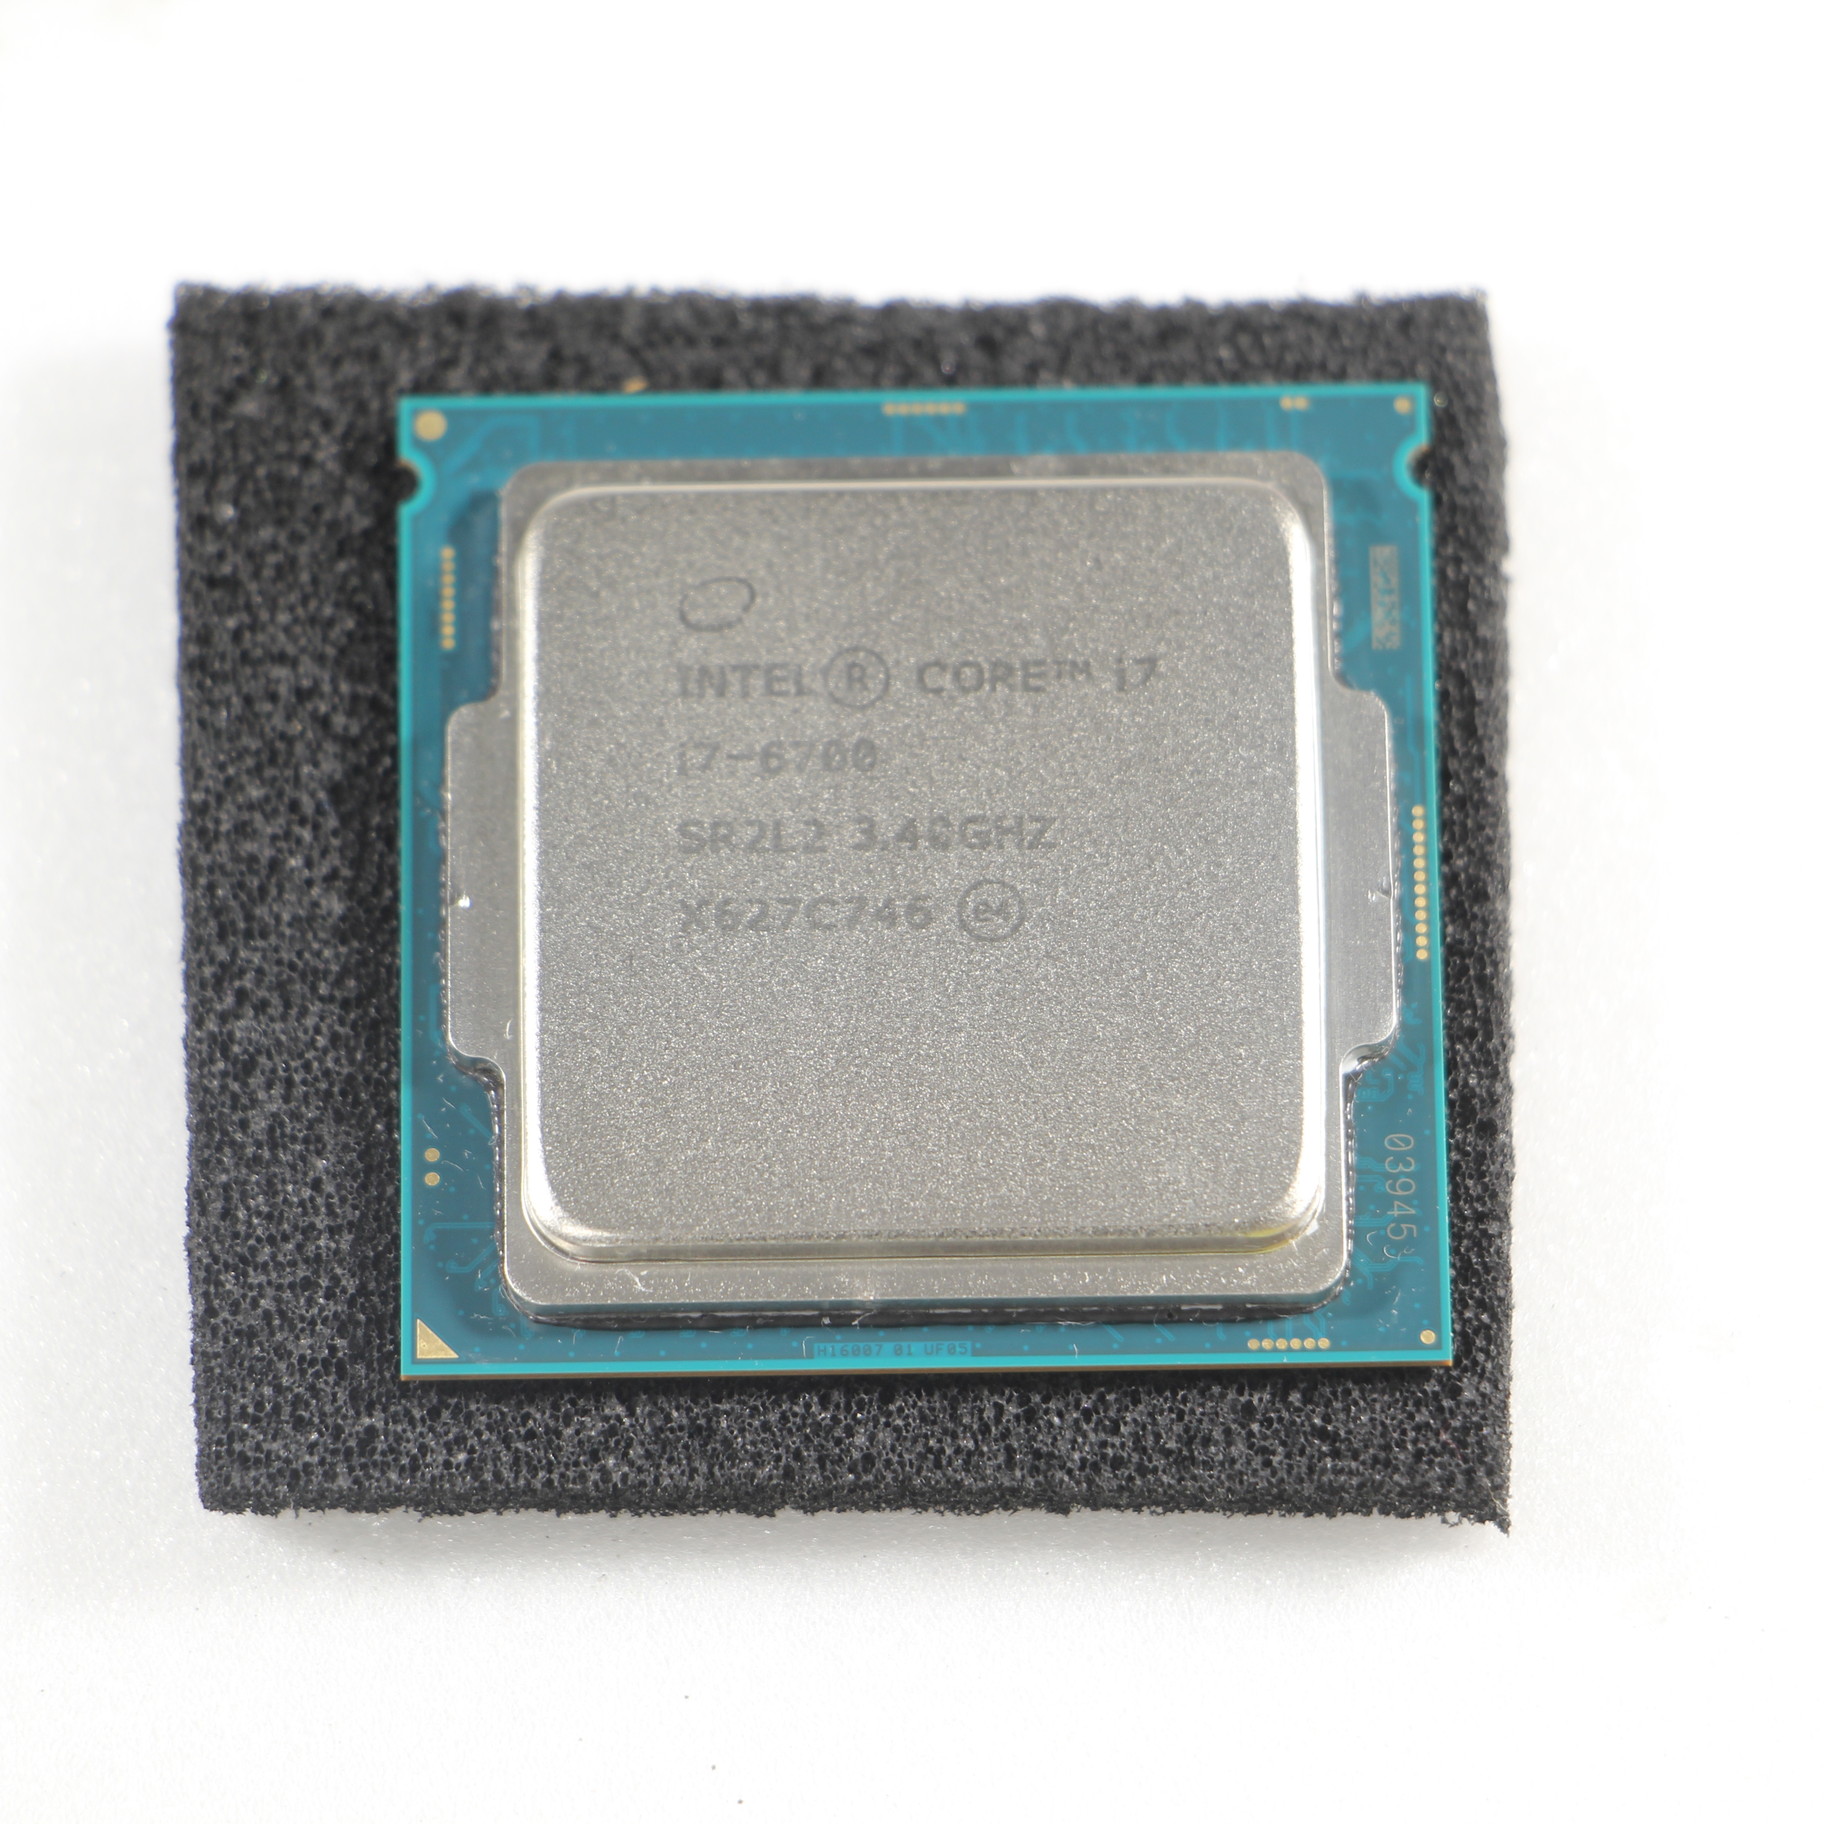 Intel Core i7-6700 3.4GHz